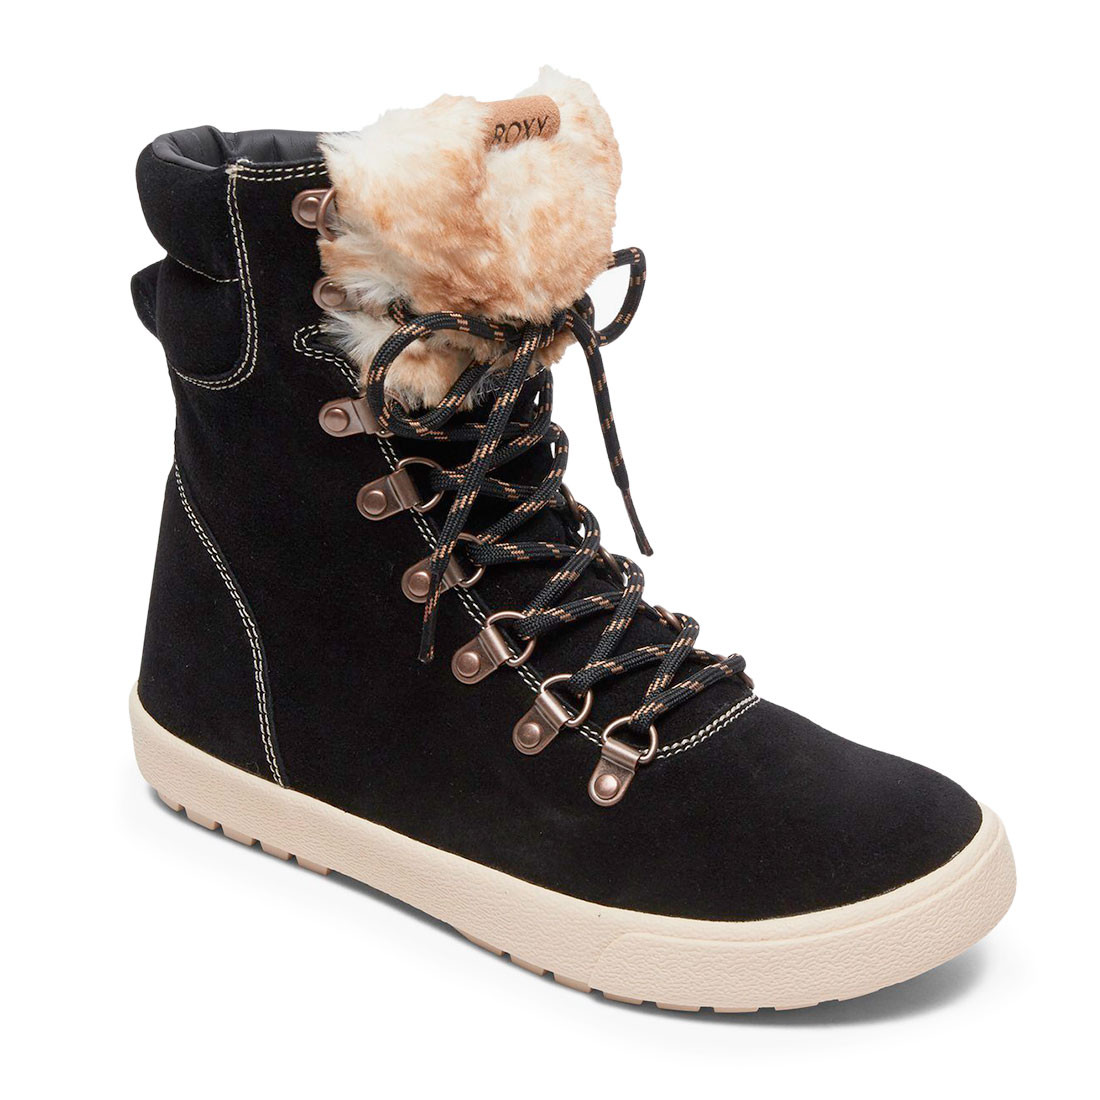 Winter shoes Roxy Anderson II black | Snowboard Zezula